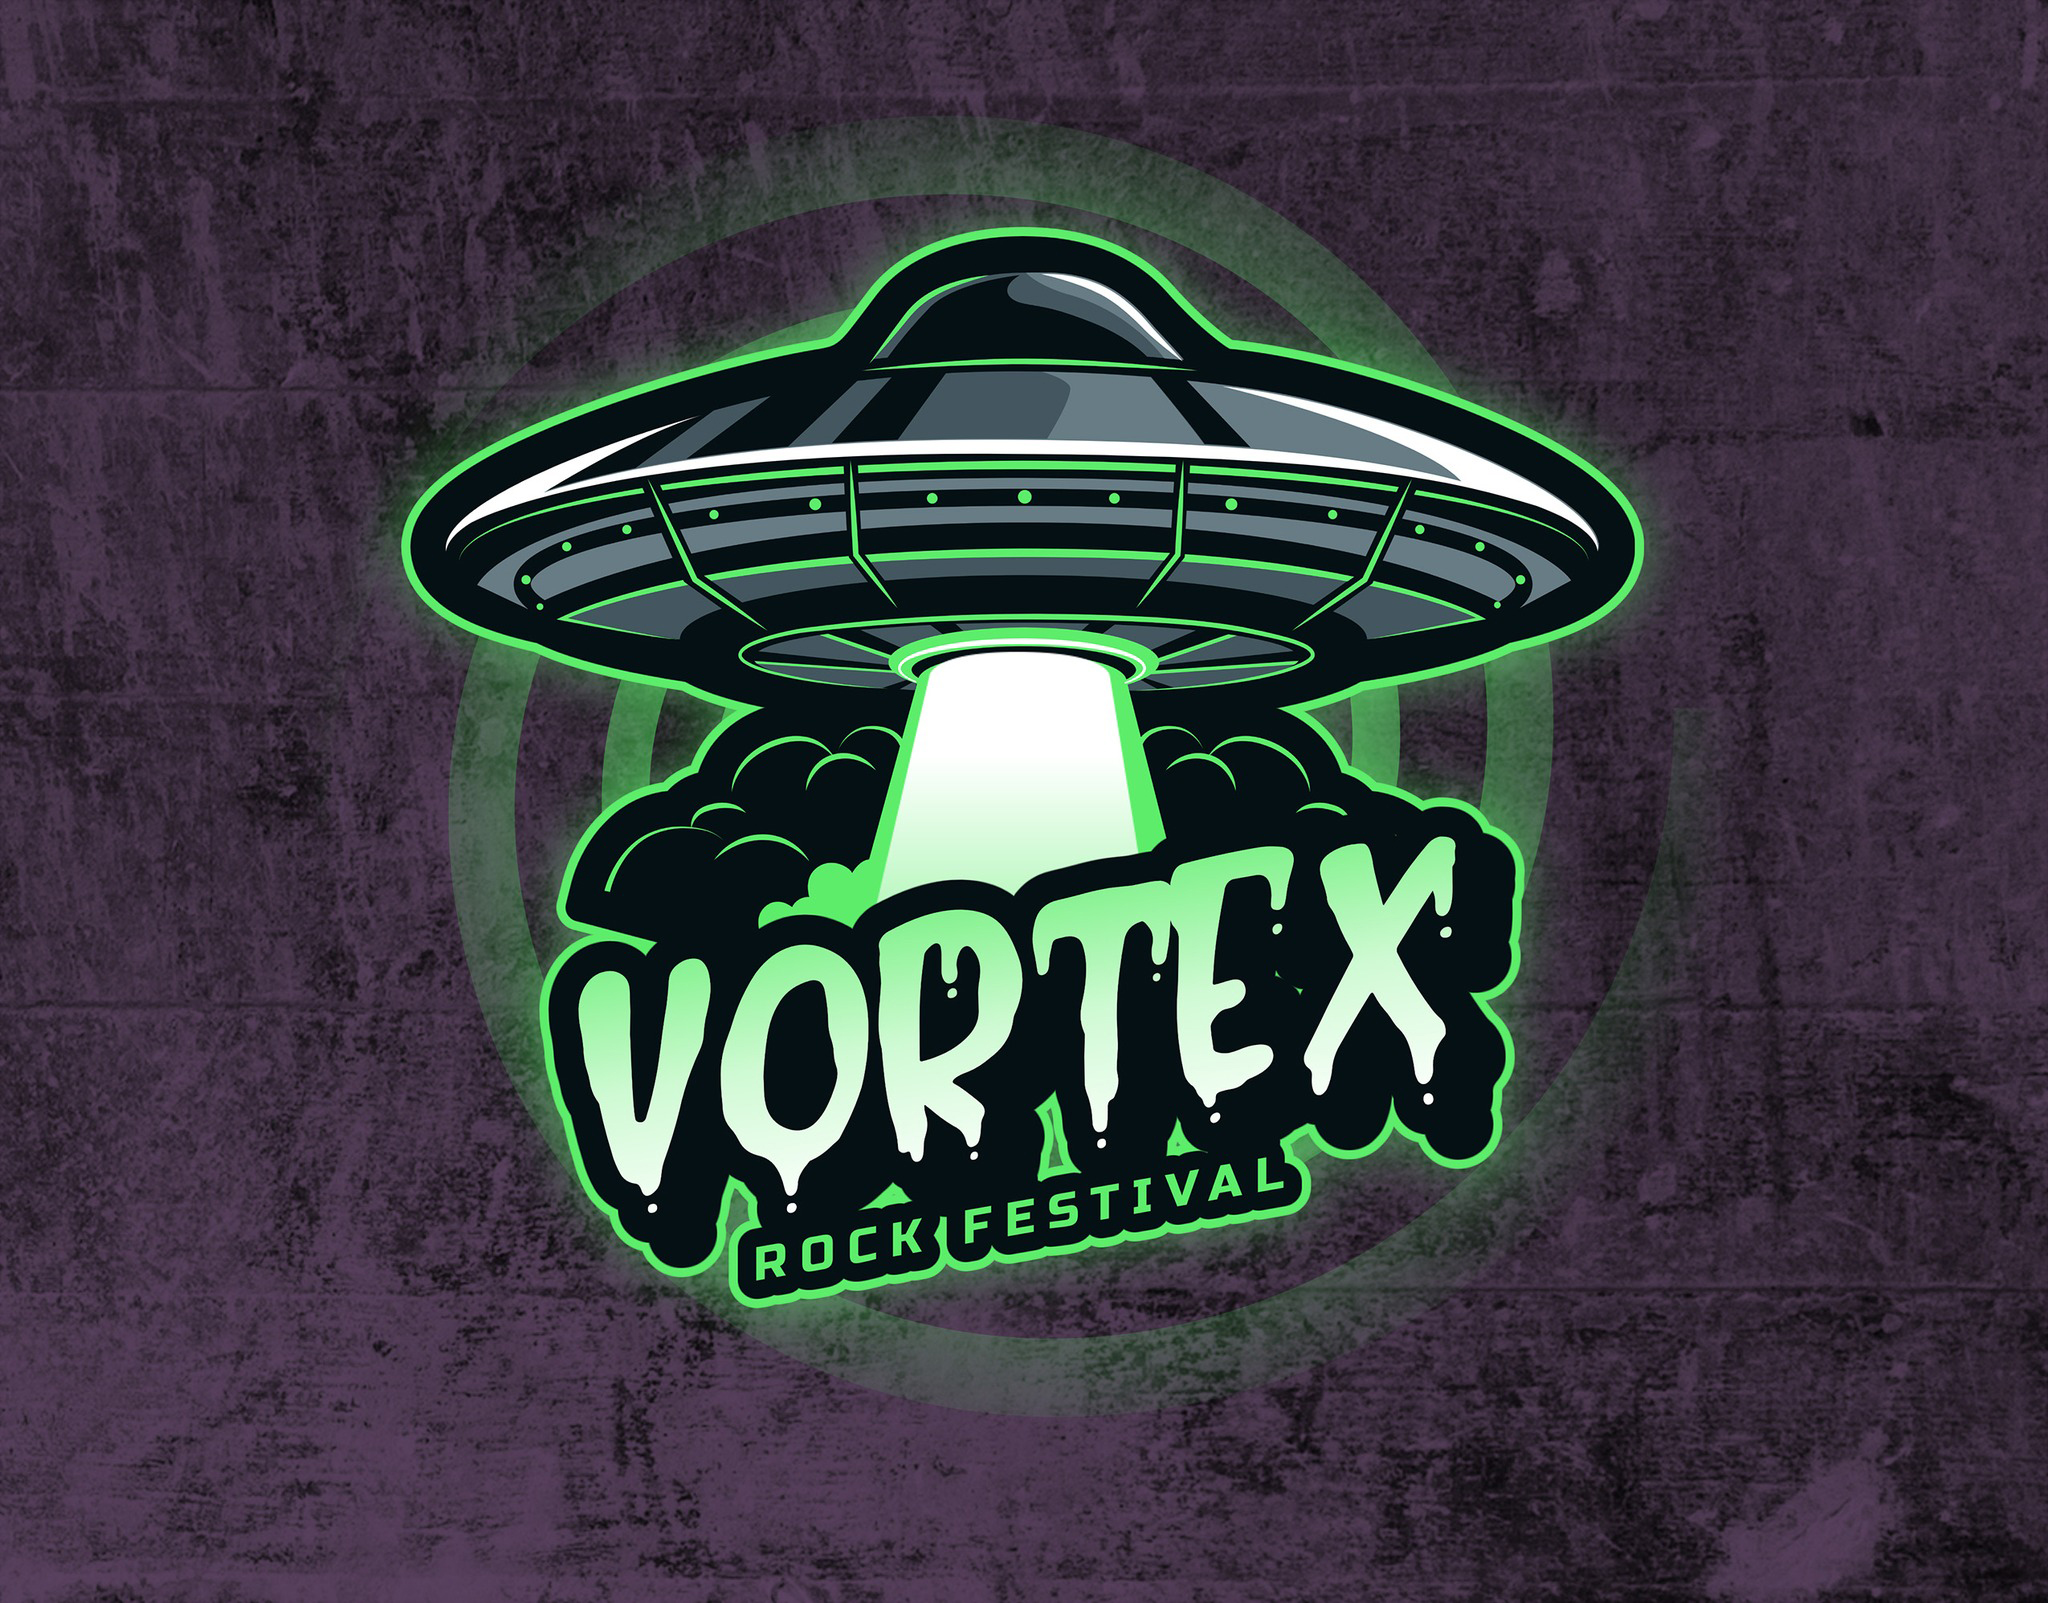 Vortex Rock Festival General Admission Ticket